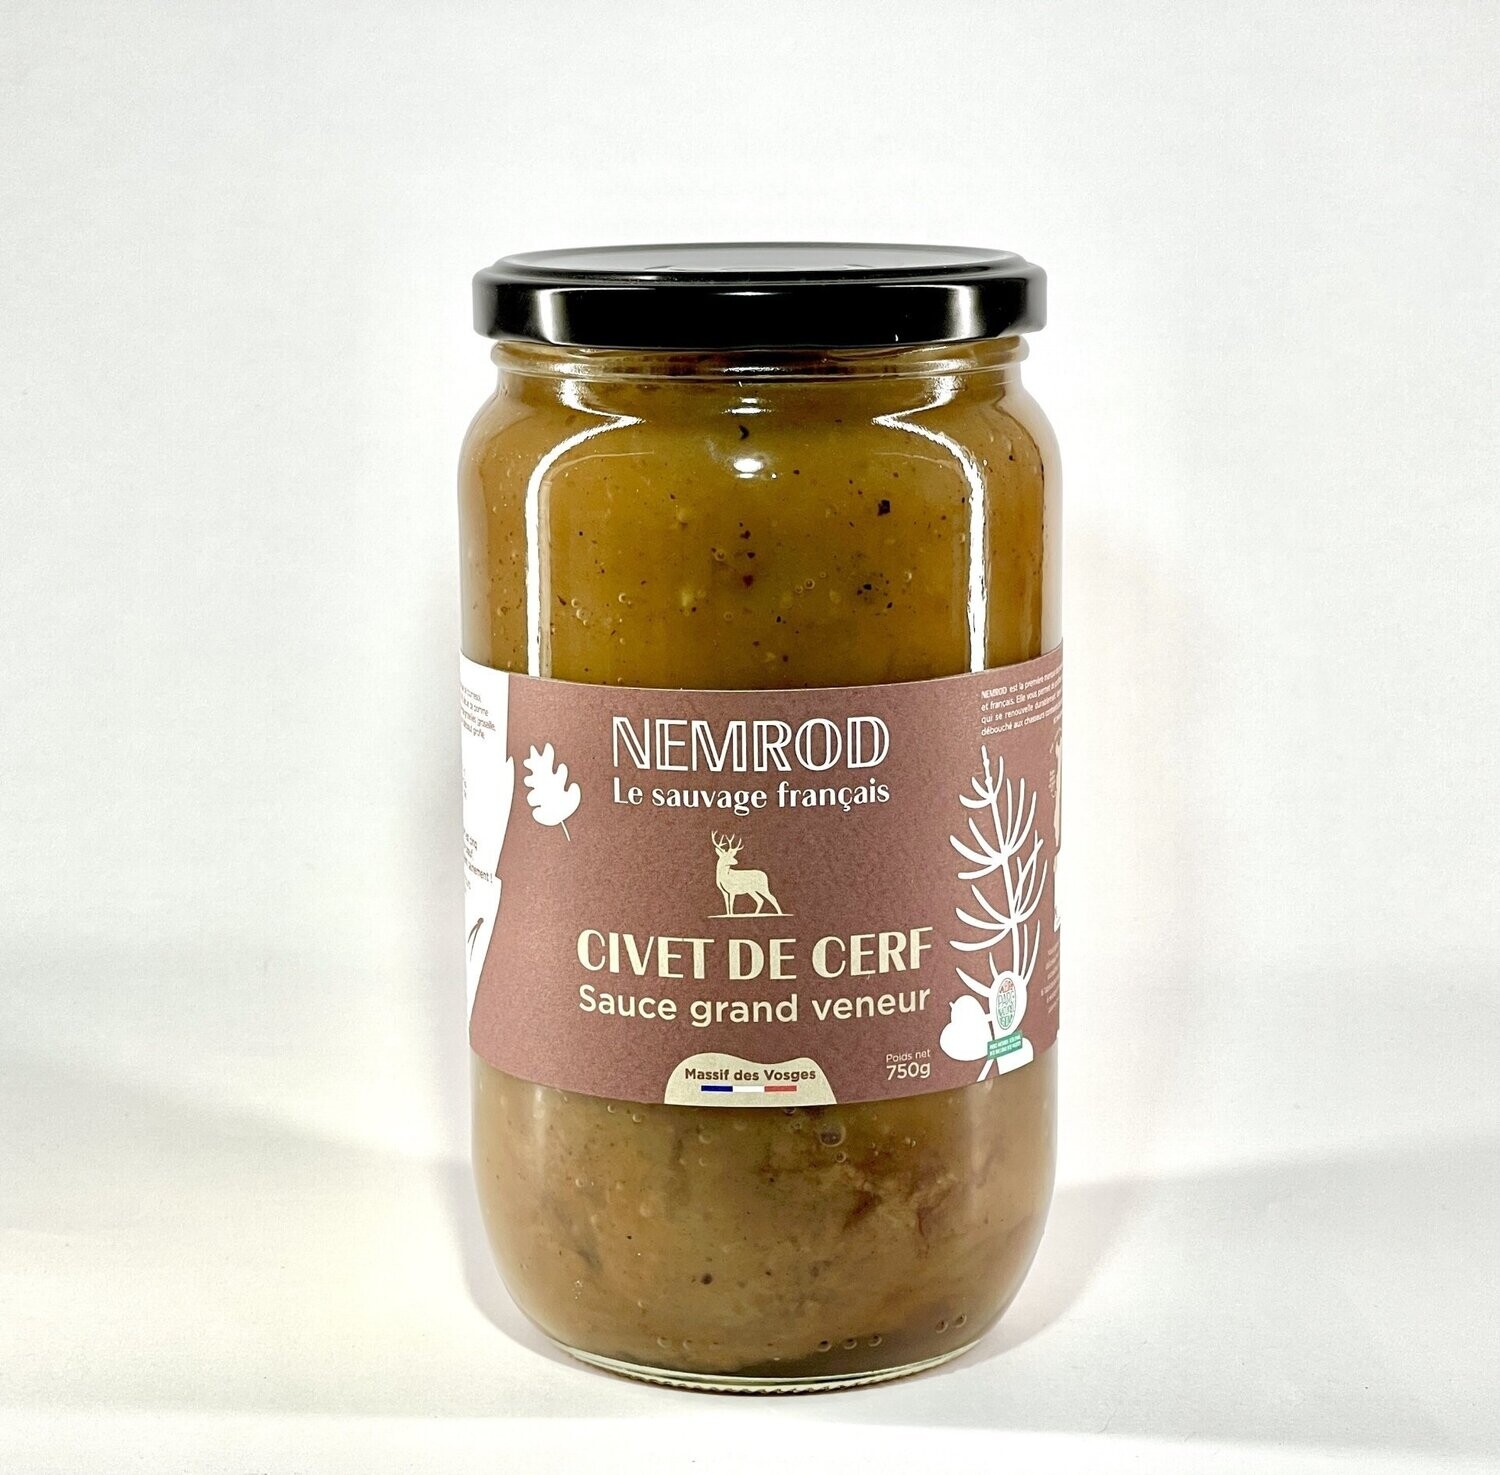 Civet de Cerf sauce grand veneur